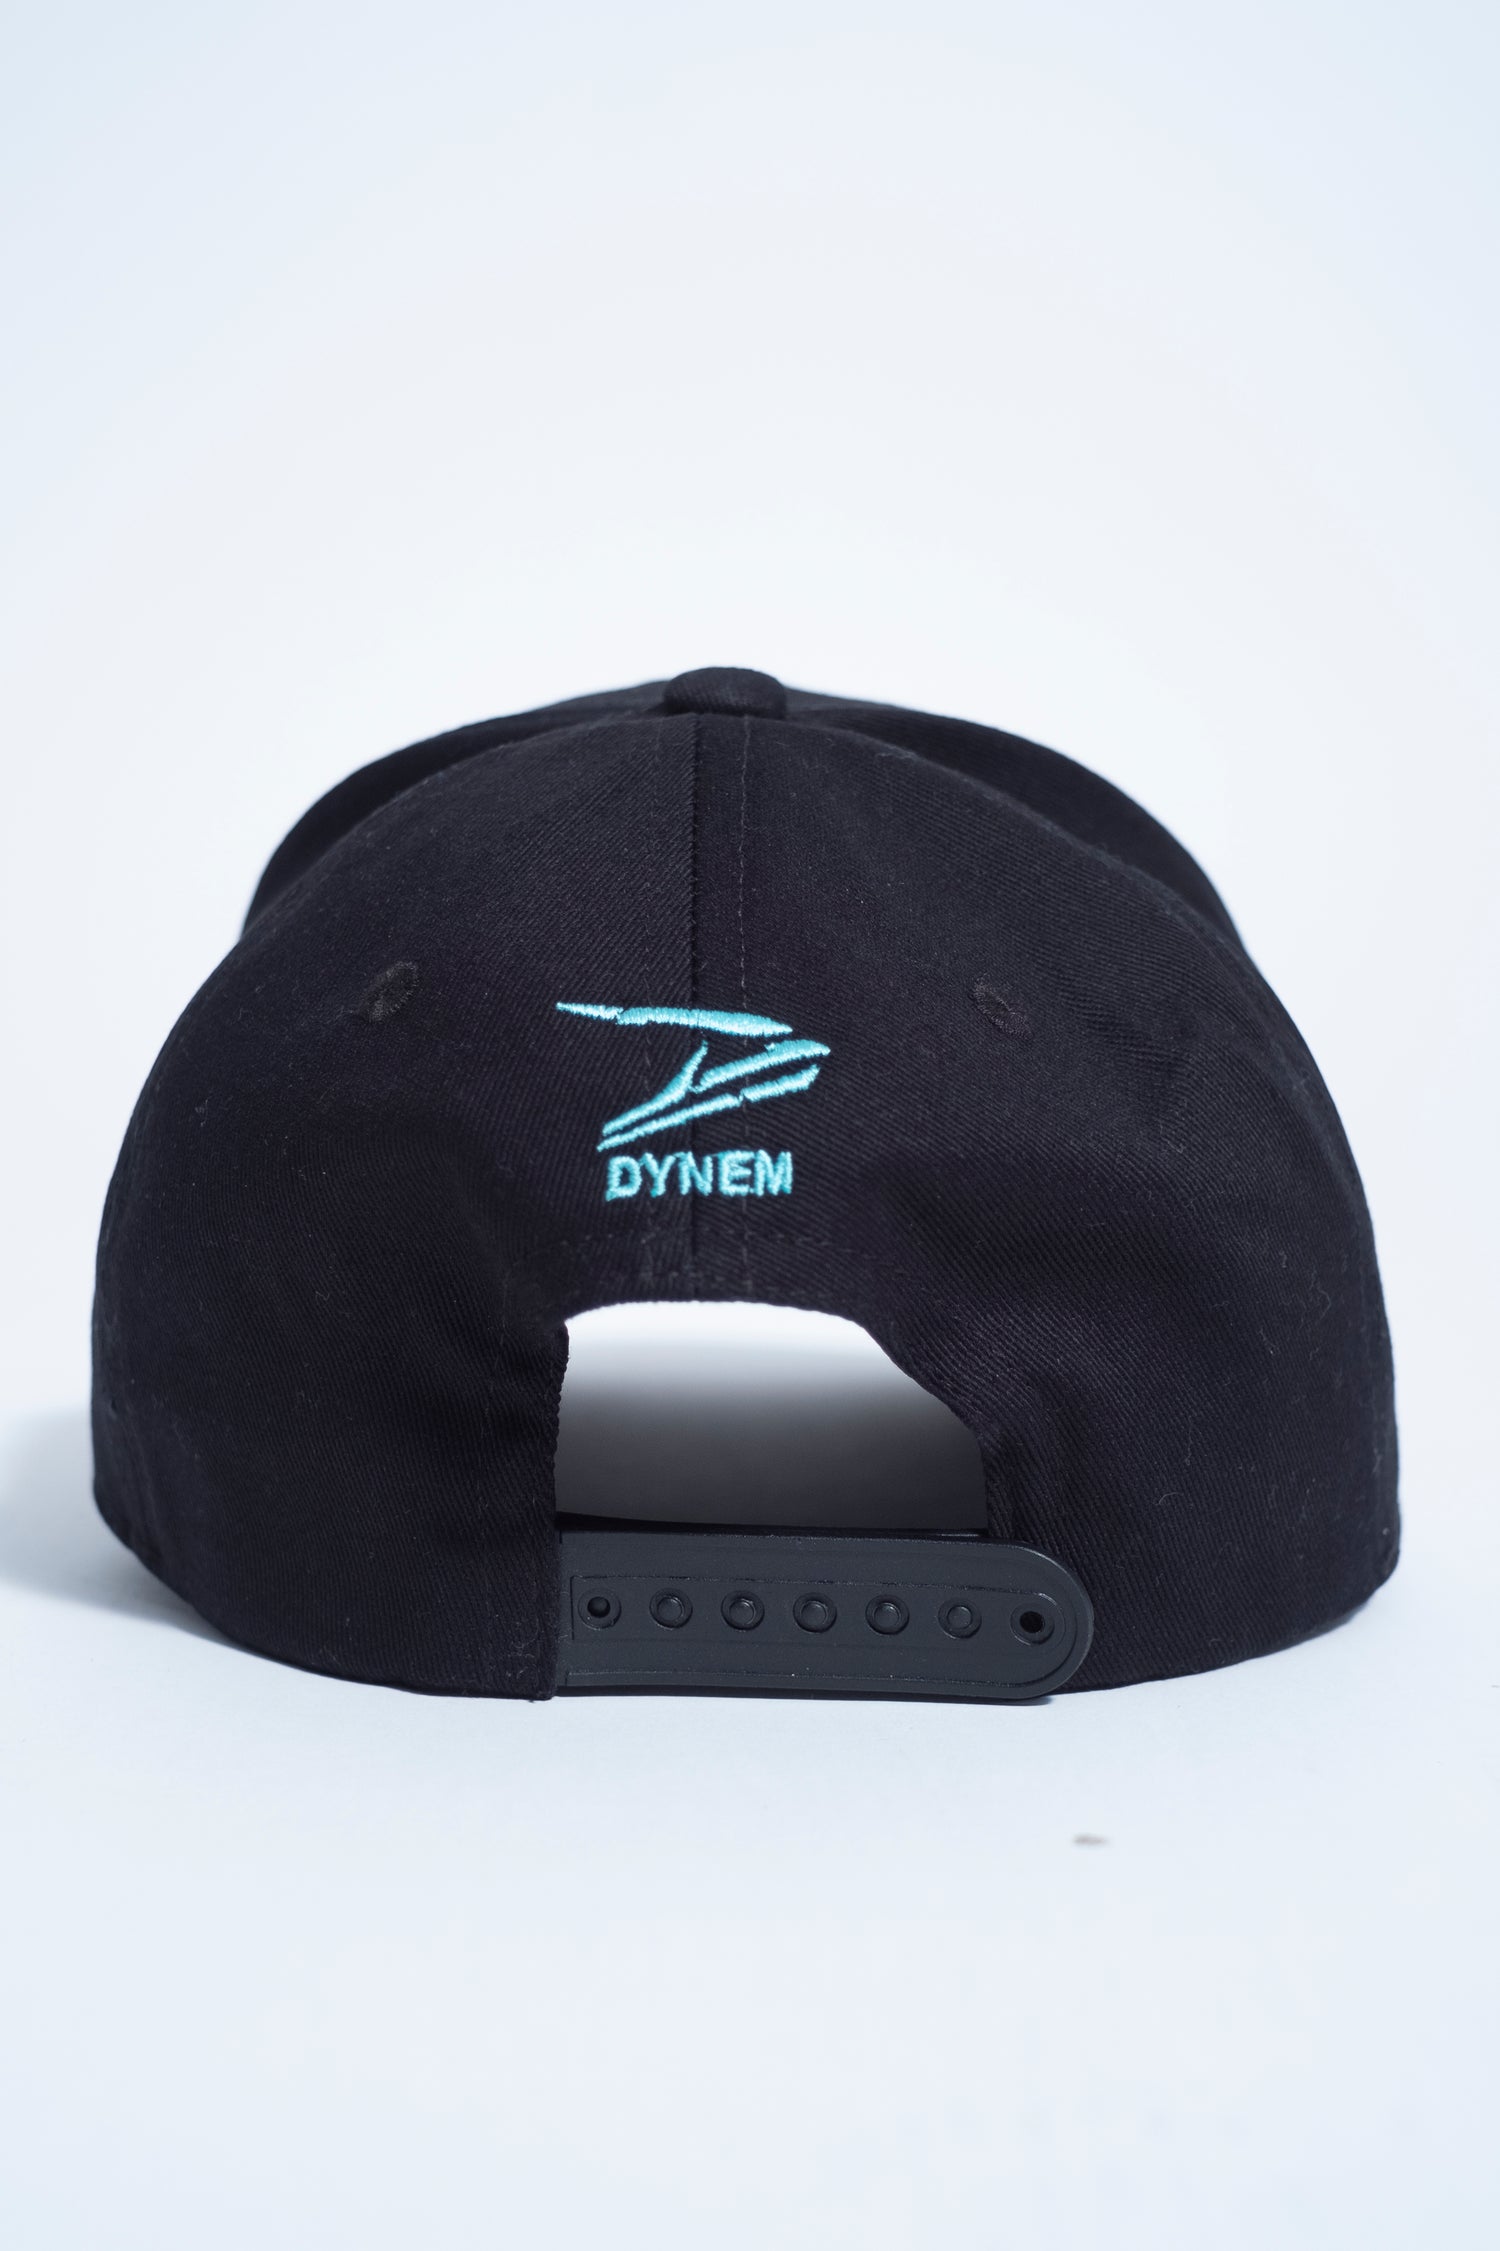 Dynem™ Baseball Cap in Black & Cyan Dynem Brand Logo